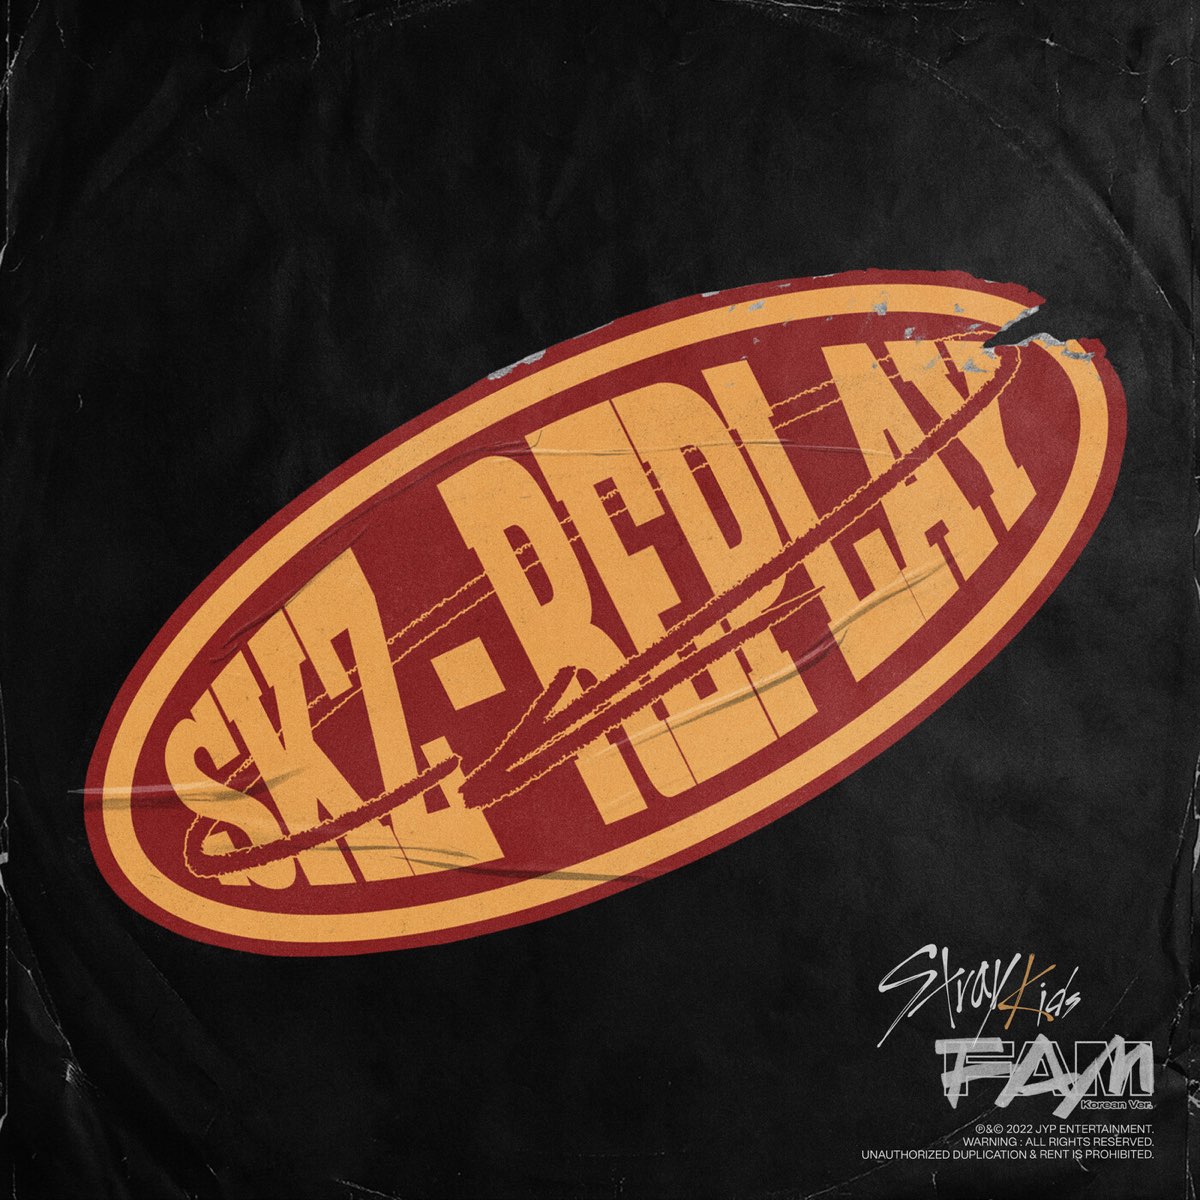 ‎SKZ-REPLAY - Album by Stray Kids - Apple Music